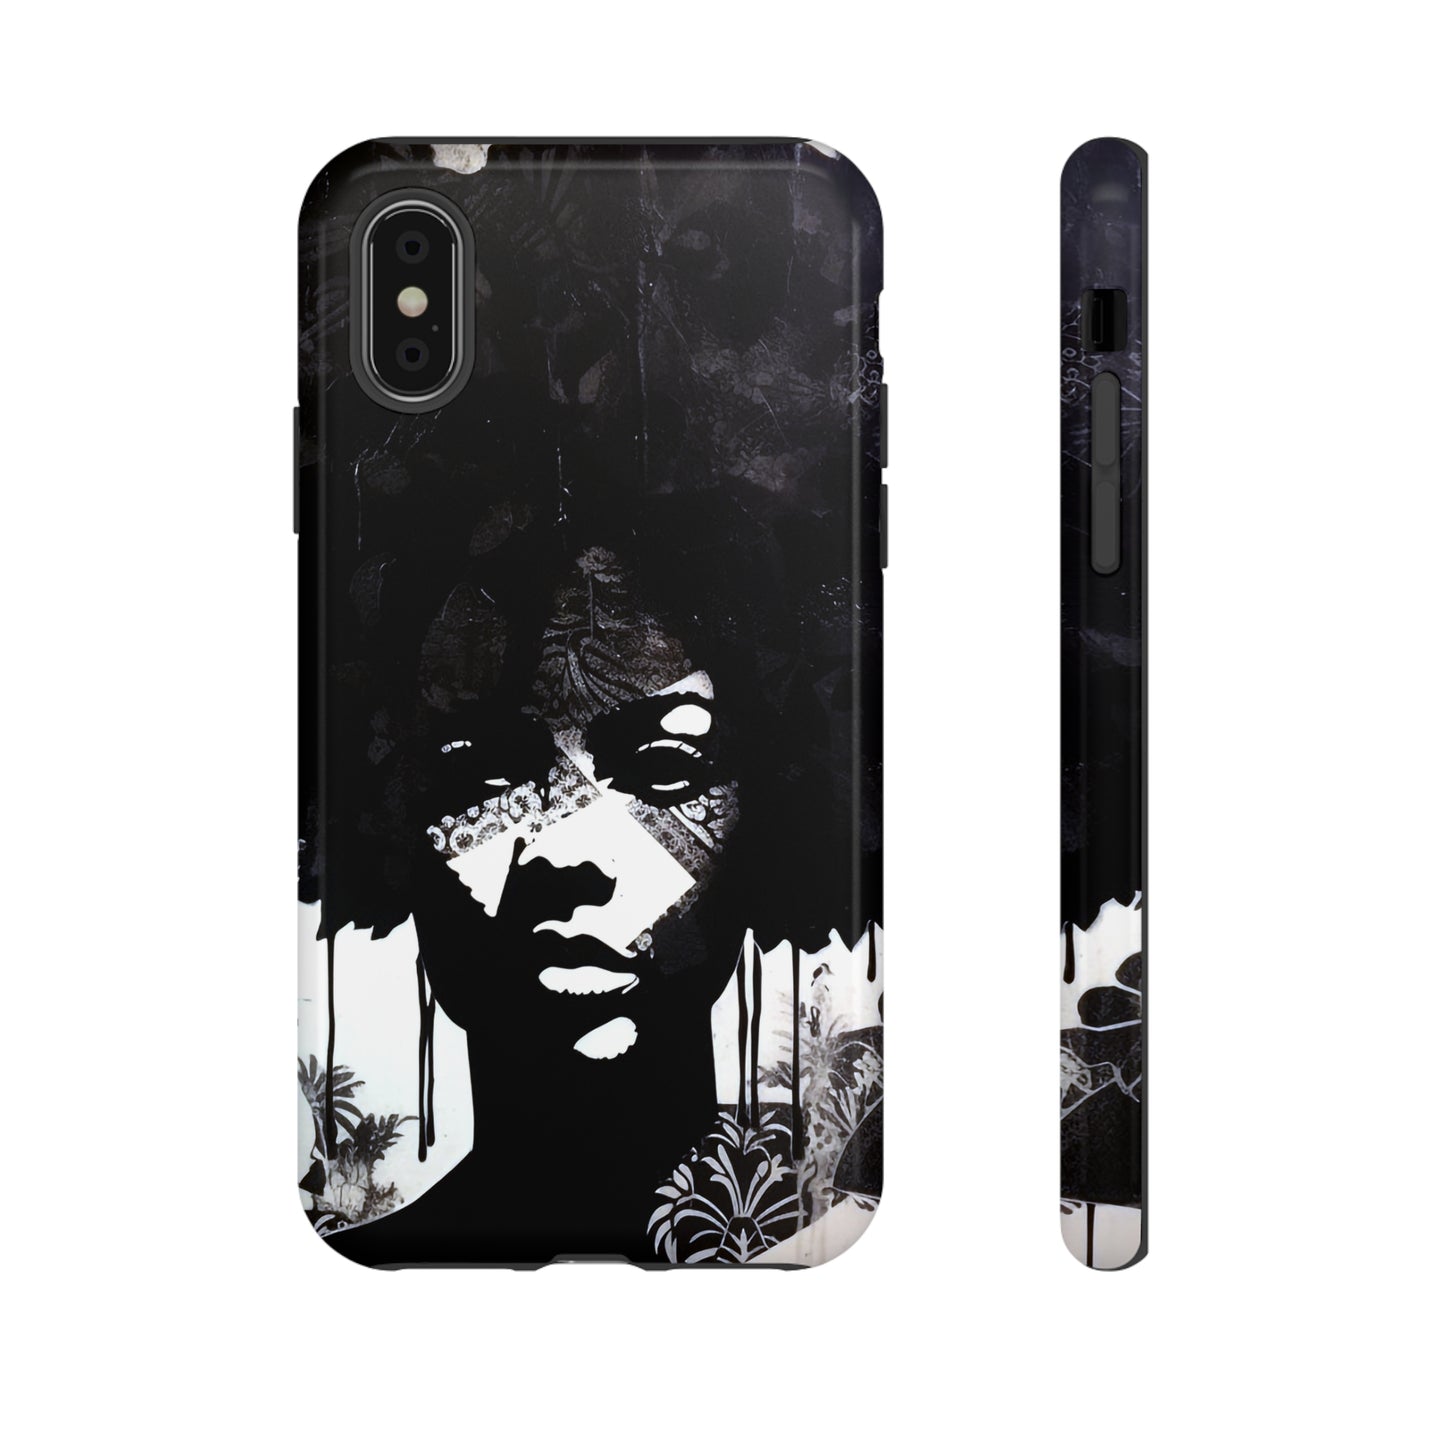 Afro Stencil Phone Case